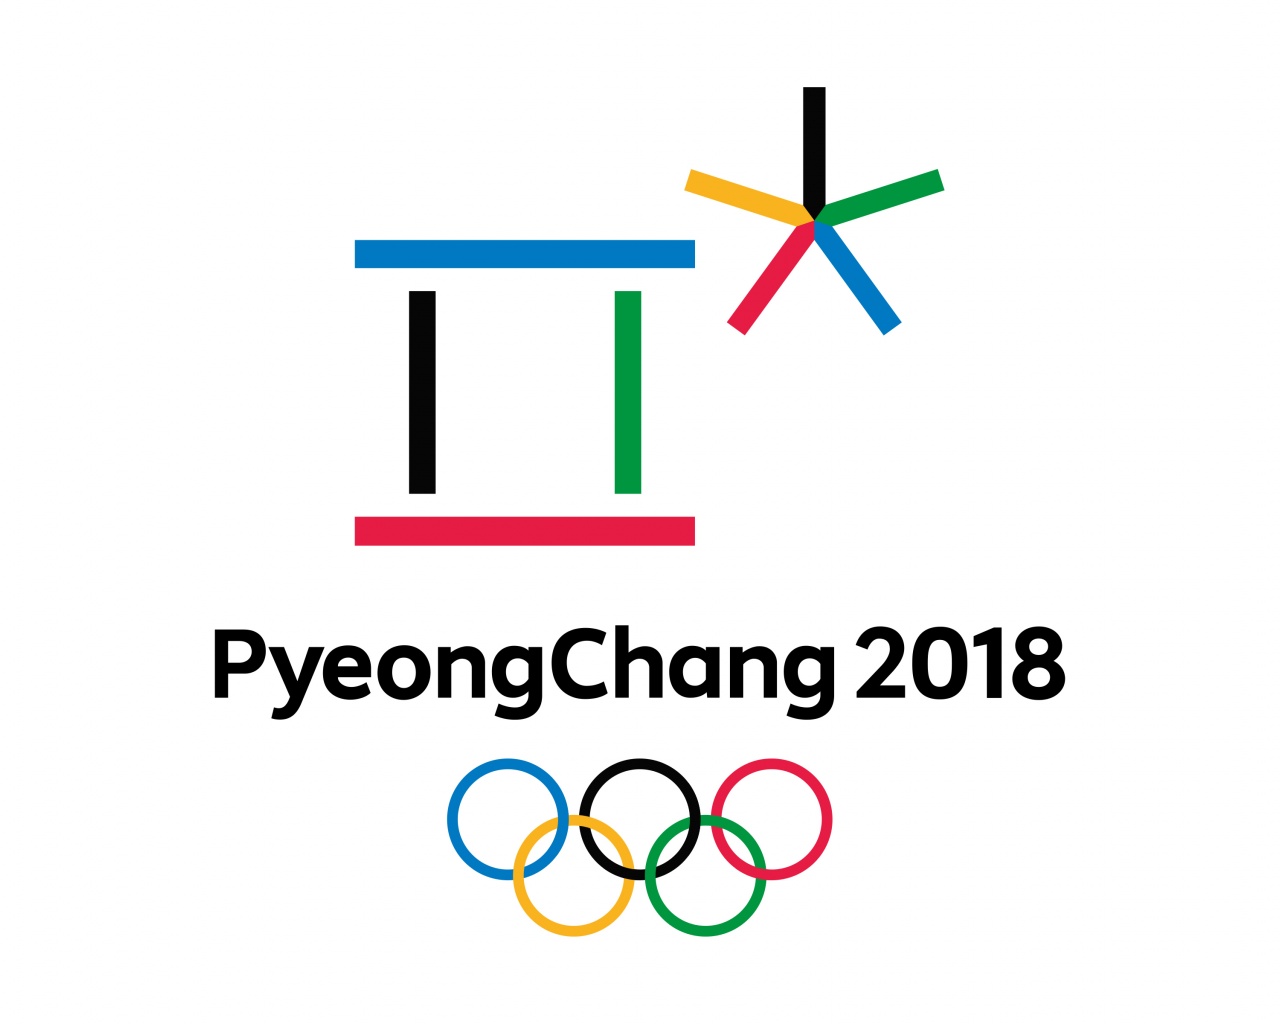 PyeongChang 2018 - Winter Olympics